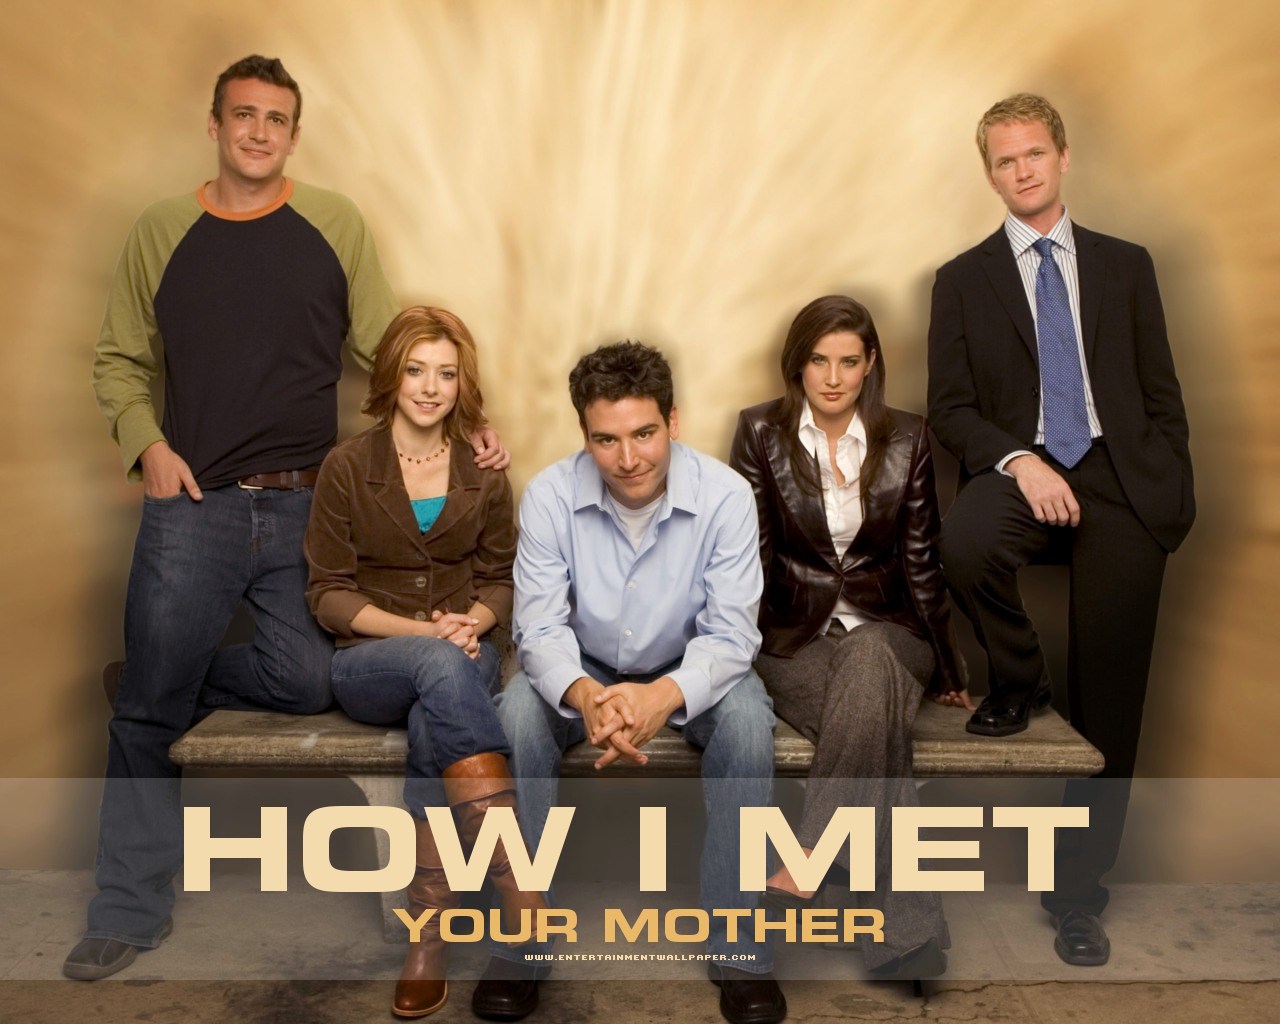 image: How-I-Met-Your-Mother-Cast-how-i-met-your-mother-791317_1280_1024